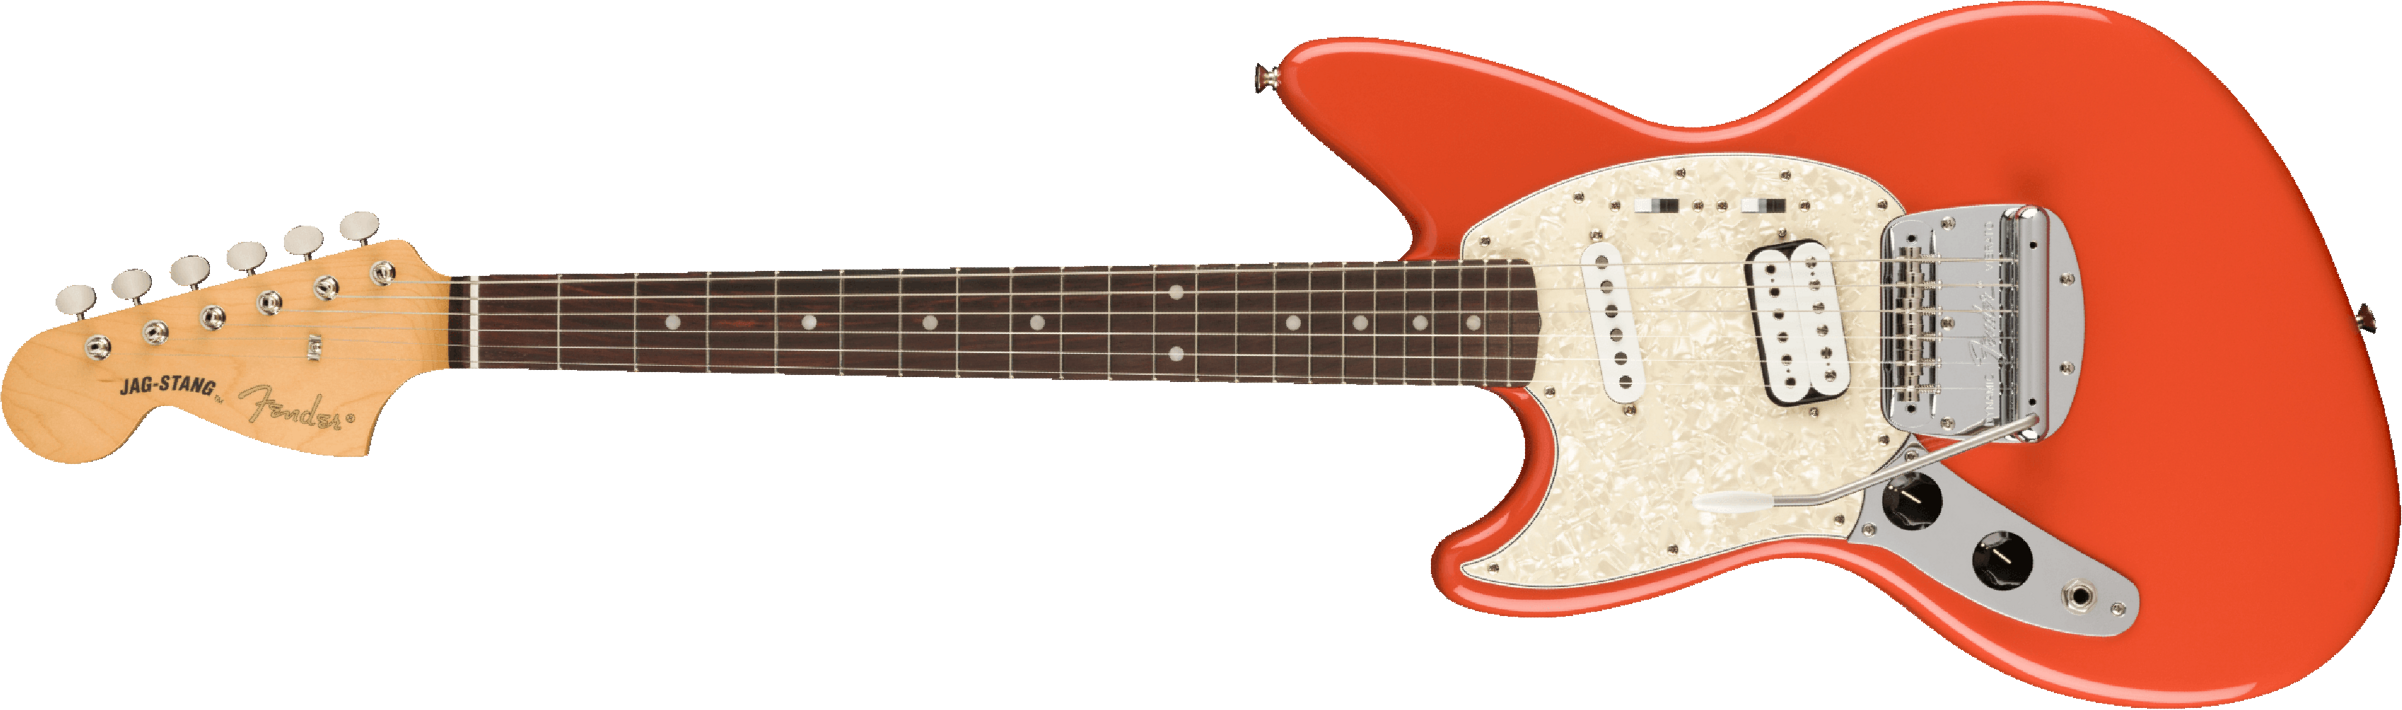 Fender Jag-stang Kurt Cobain Artist Gaucher Hs Trem Rw - Fiesta Red - Left-handed electric guitar - Main picture